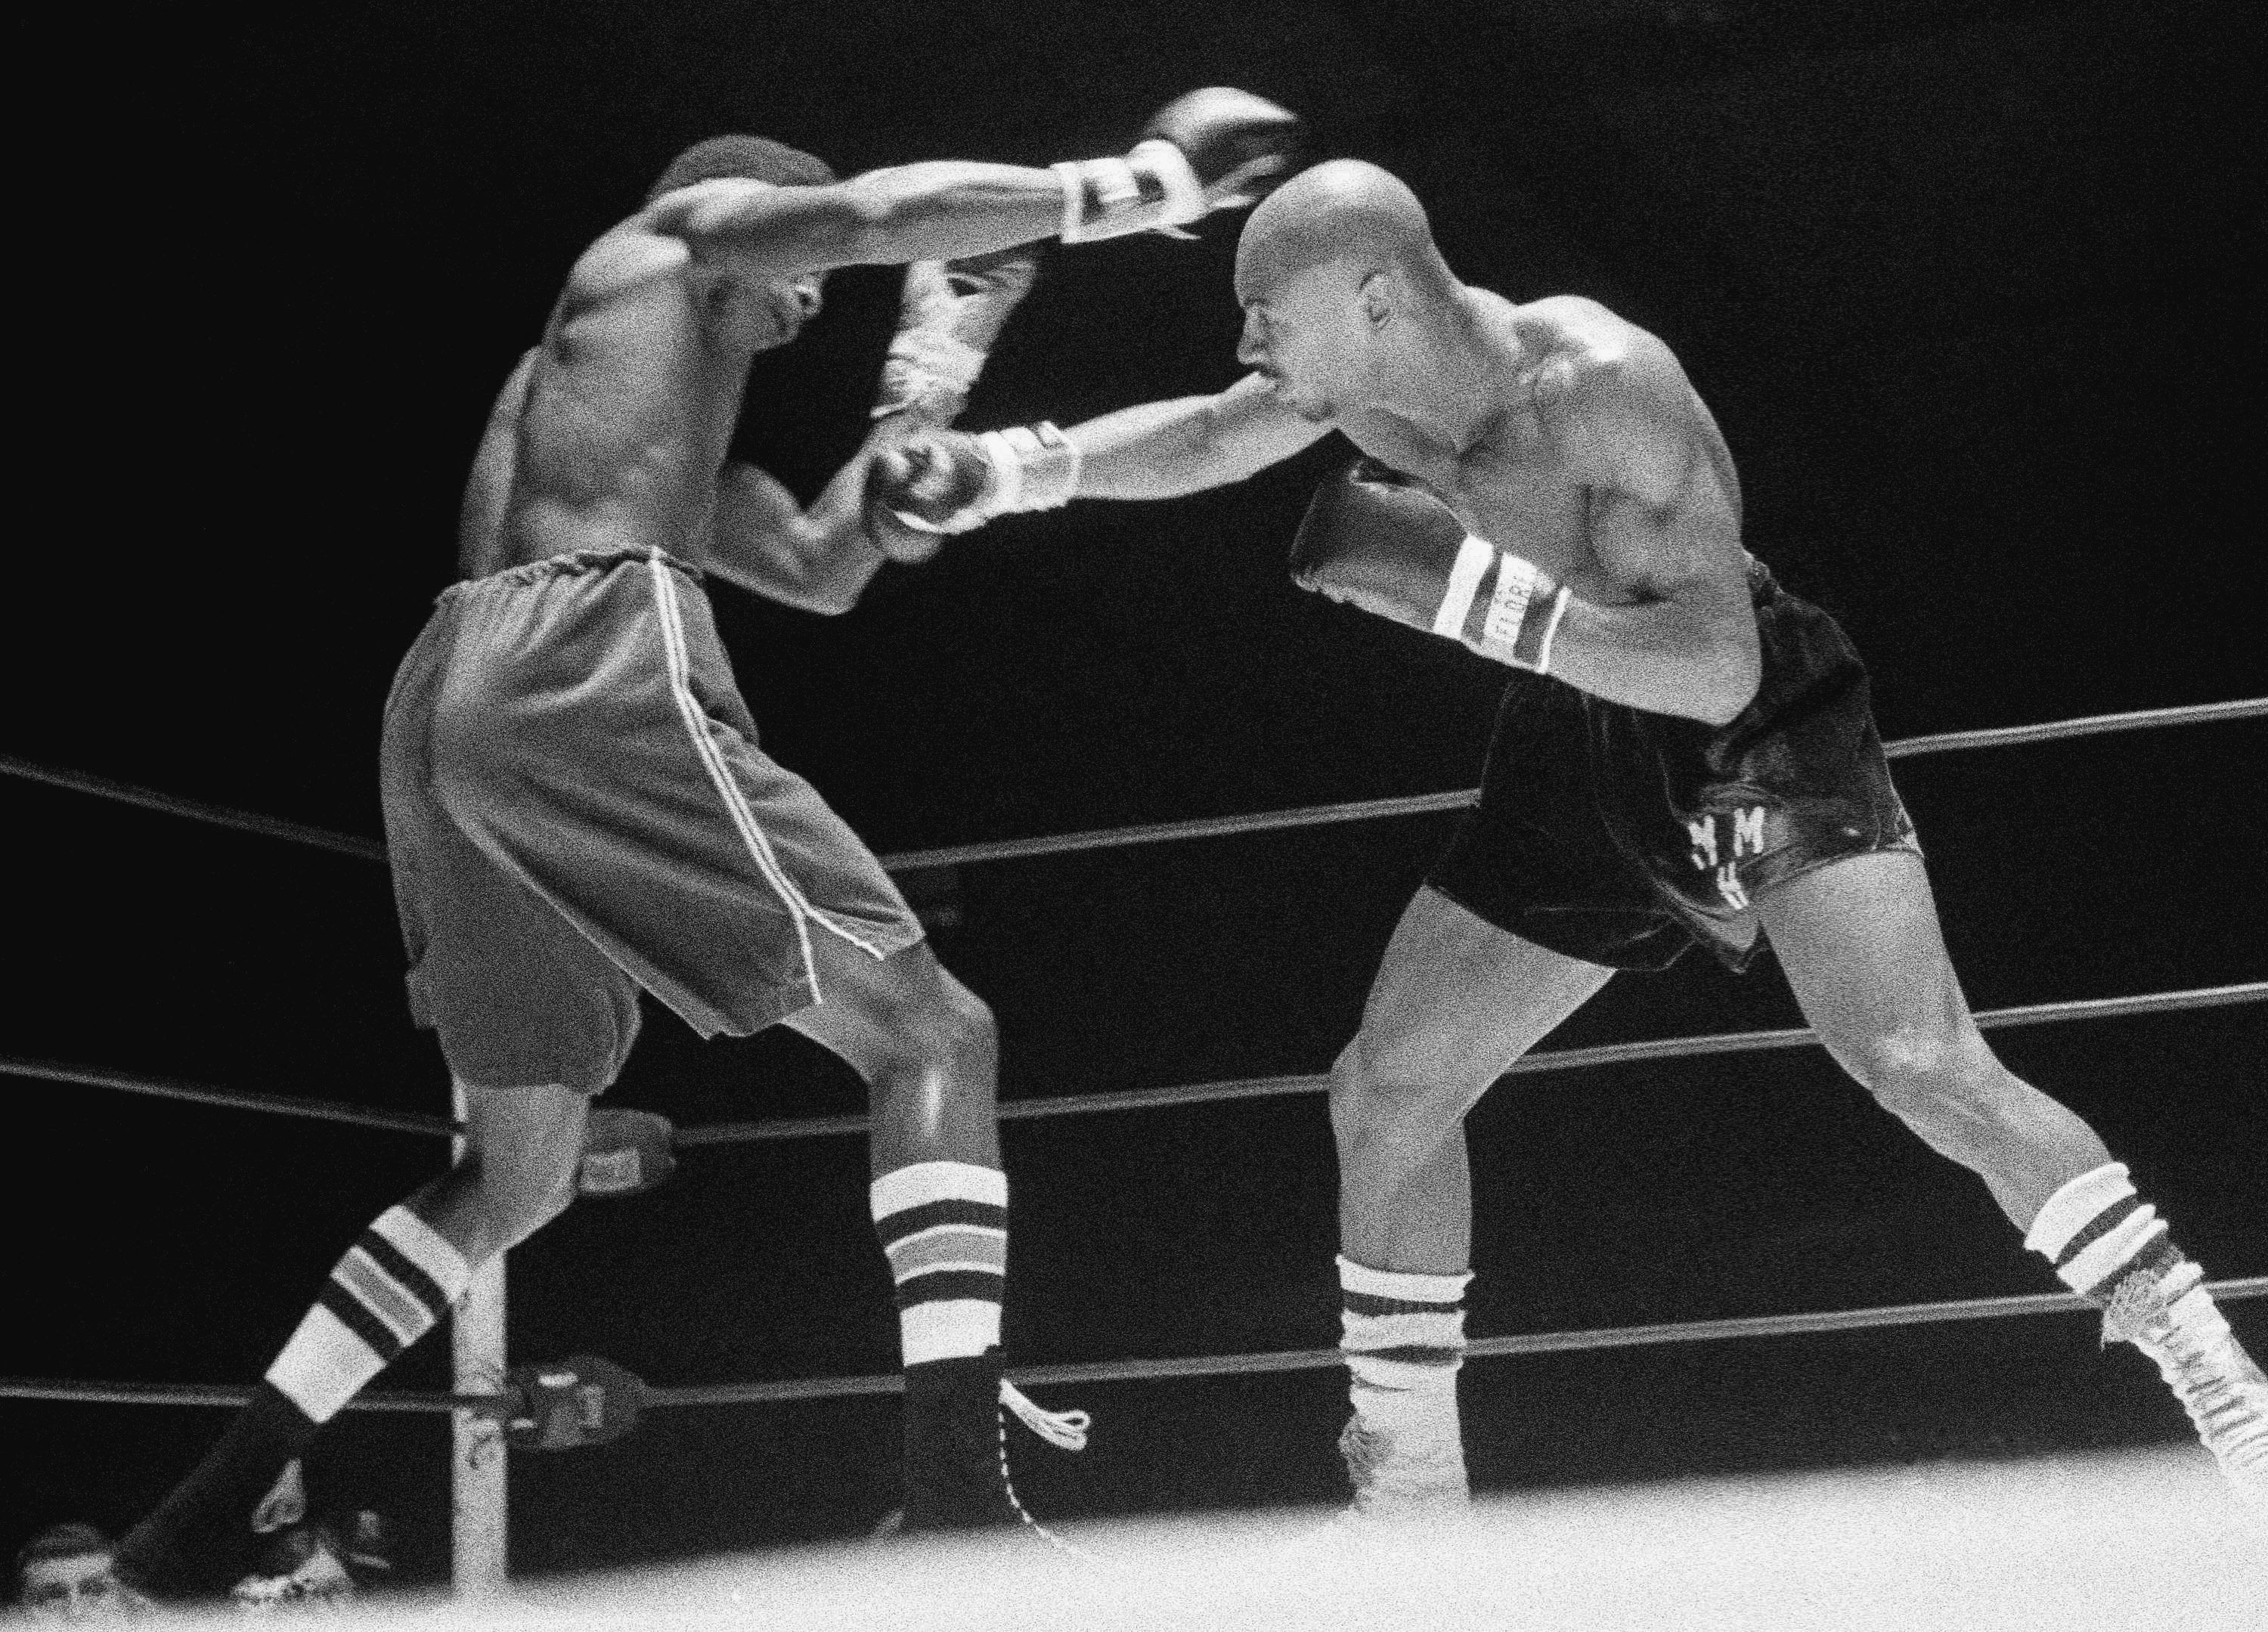 Boxing great Marvelous Marvin Hagler dies at 66